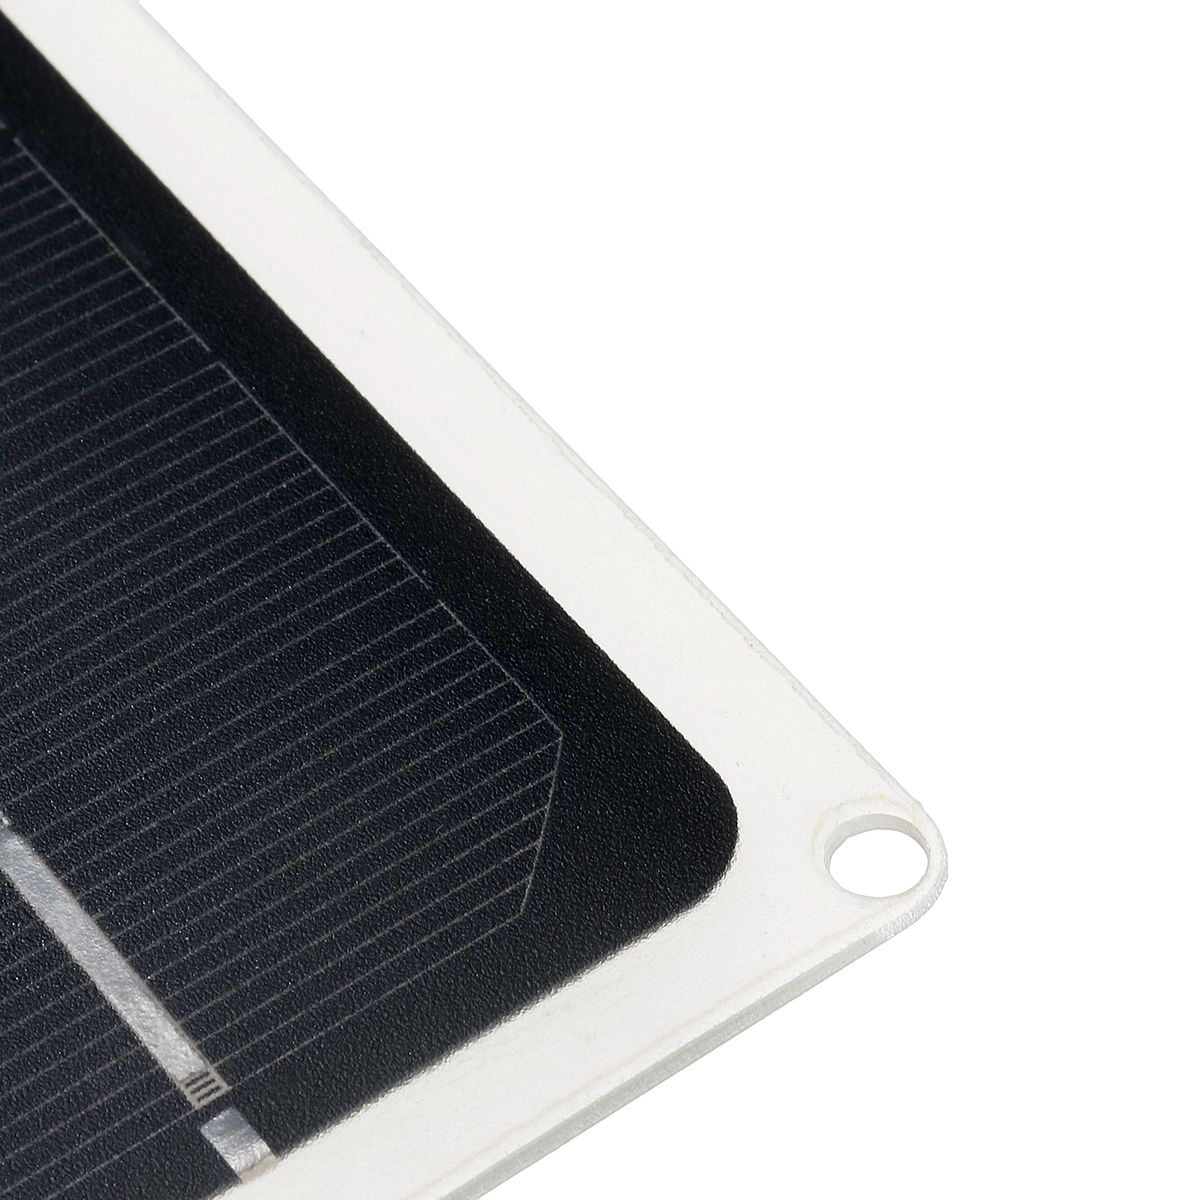 10W-Portable-Solar-Power-Panel-Monocrystalline-Silicon-Solar-Bank-for-Solar-Energy-Power-Charger-Kit-1729366